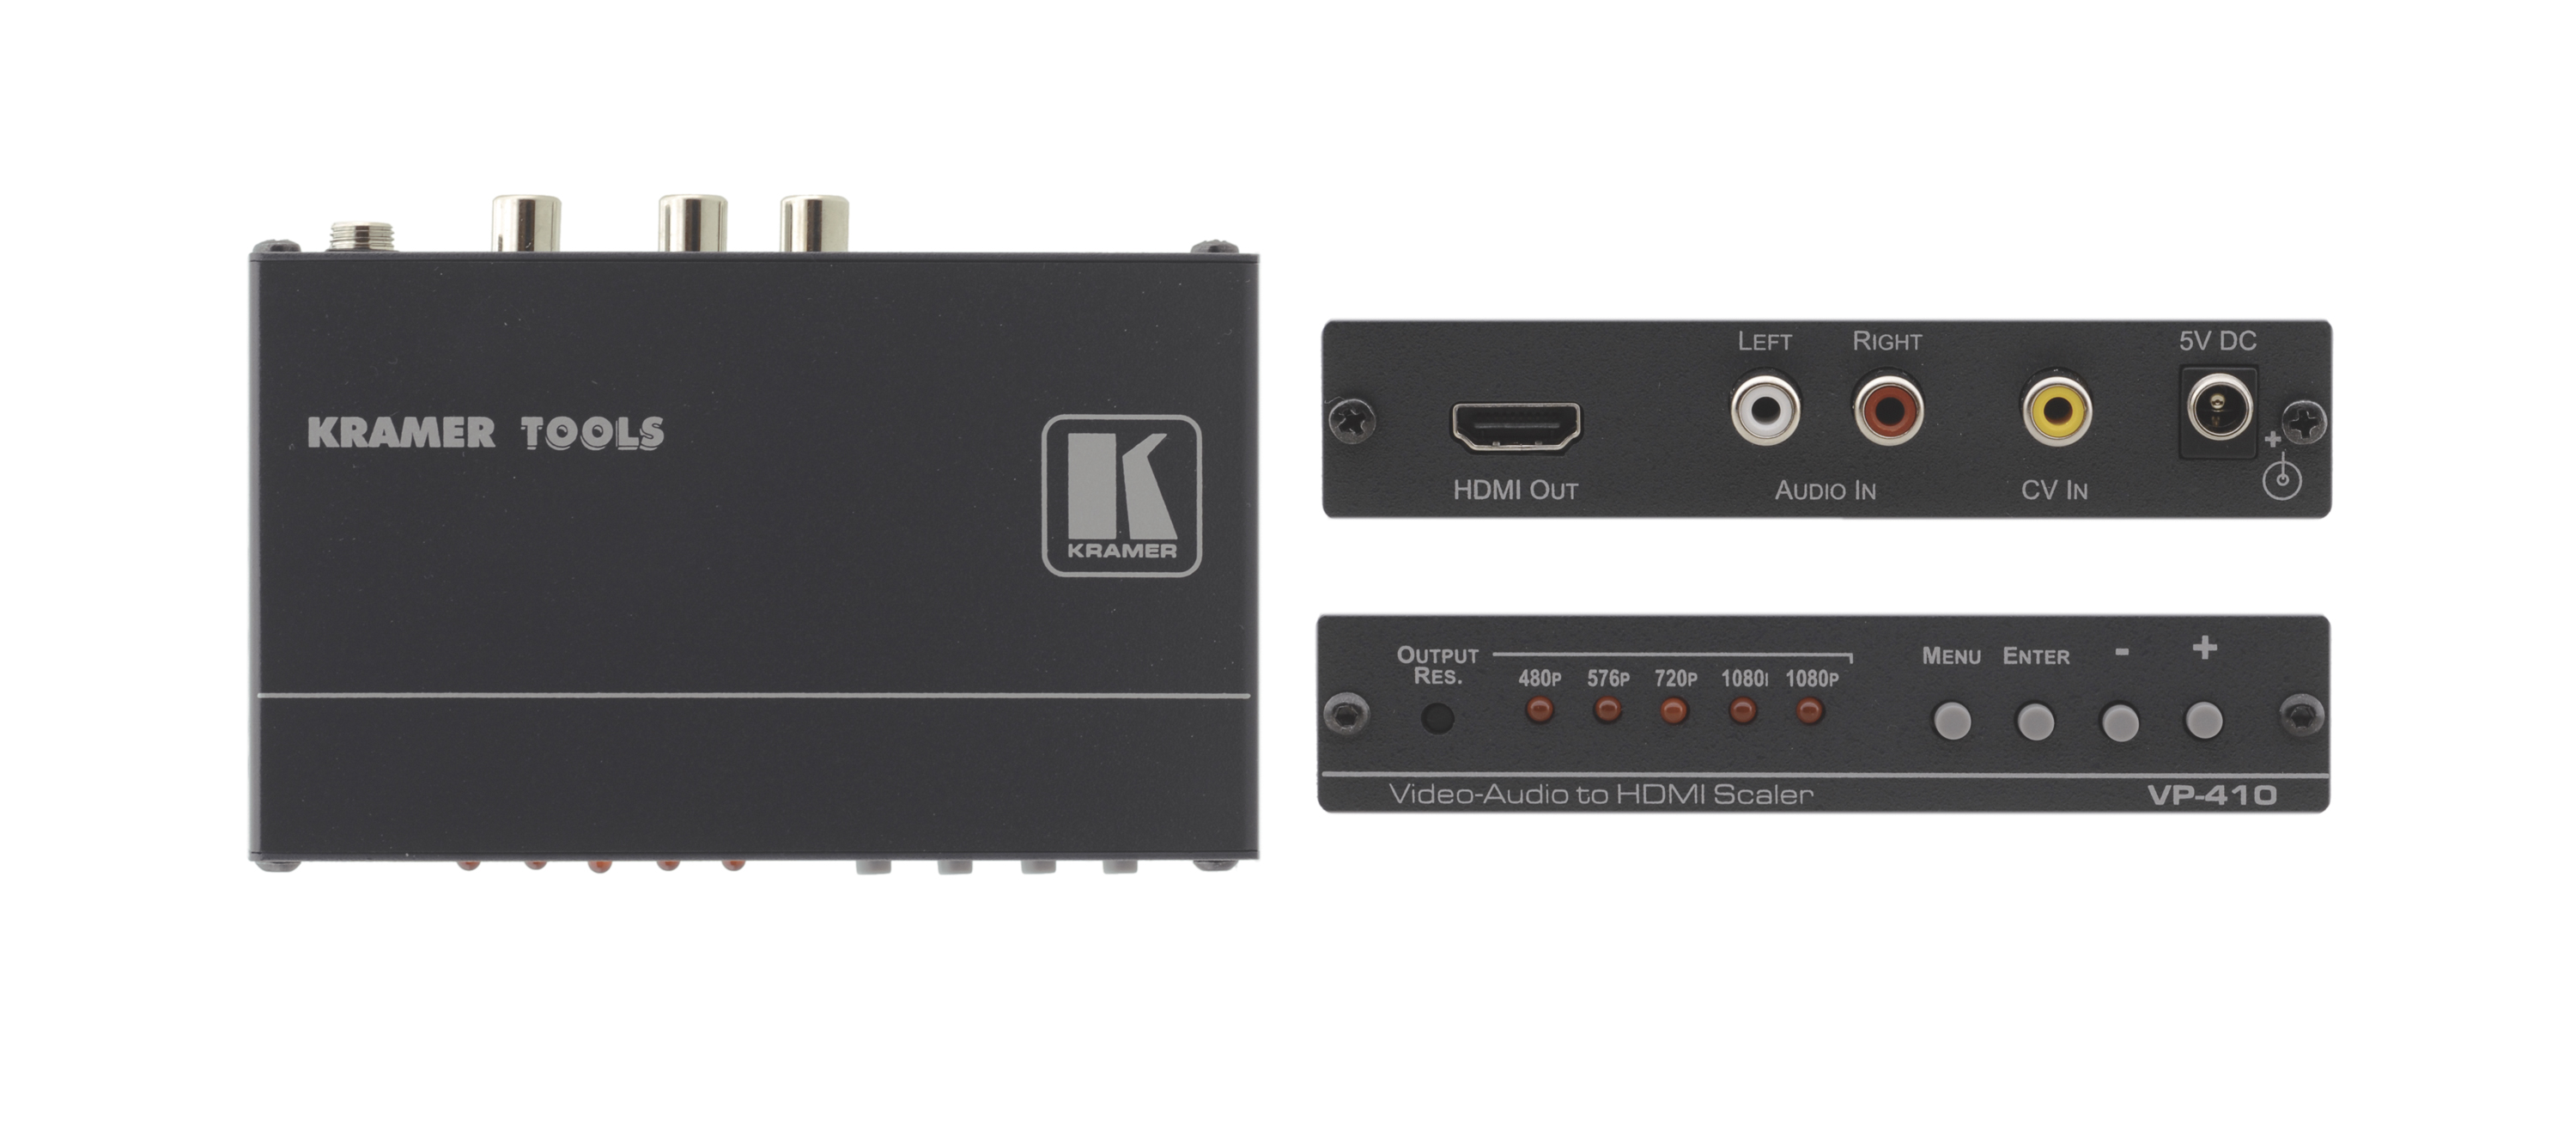 Масштабатор Kramer Масштабатор Kramer Electronics [VP-410] ProScale видеосигналов CV и аудио в формат HDMI (480p, 576p, 720p, 1080i, 1080p), HDTV совместимый